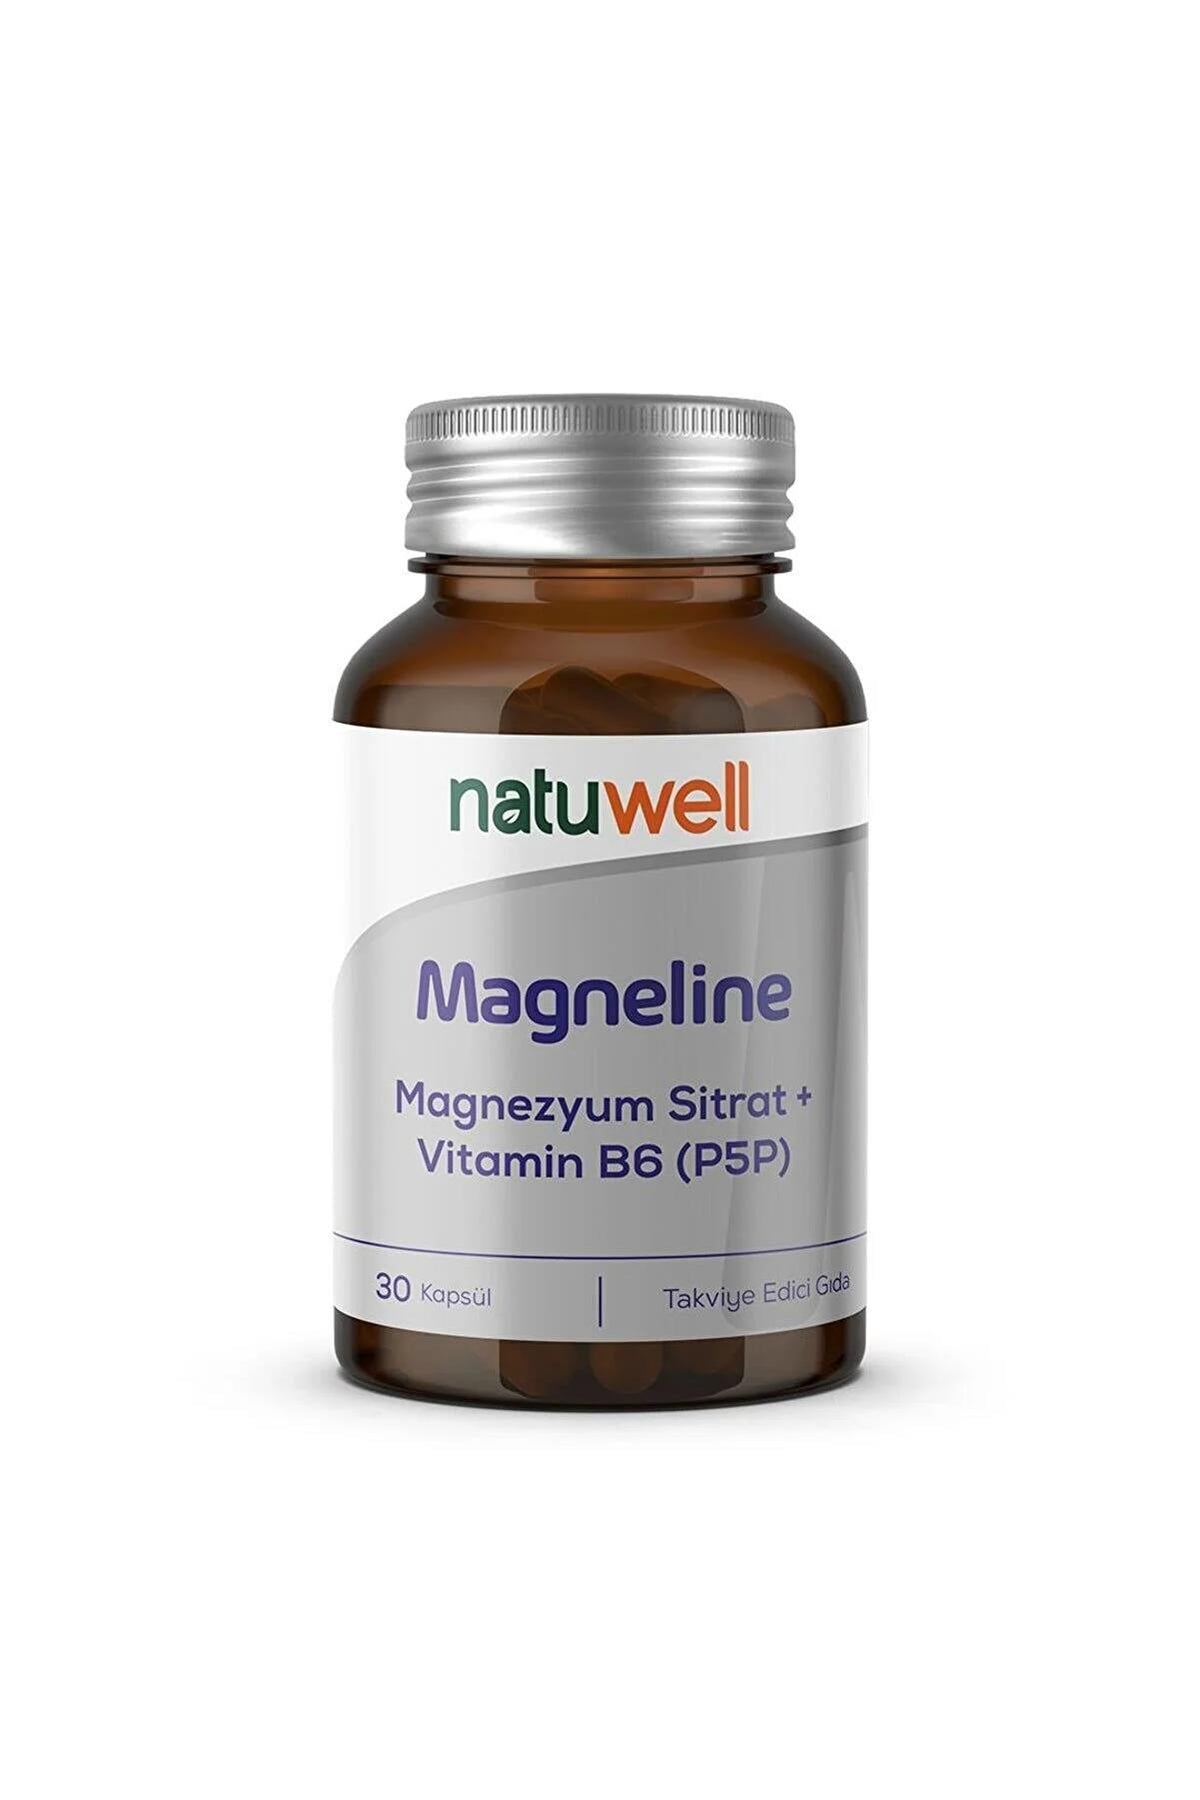 Natuwell Magneline Magnezyum Sitrat + Vitamin B6 (P5P) 30 Kapsül